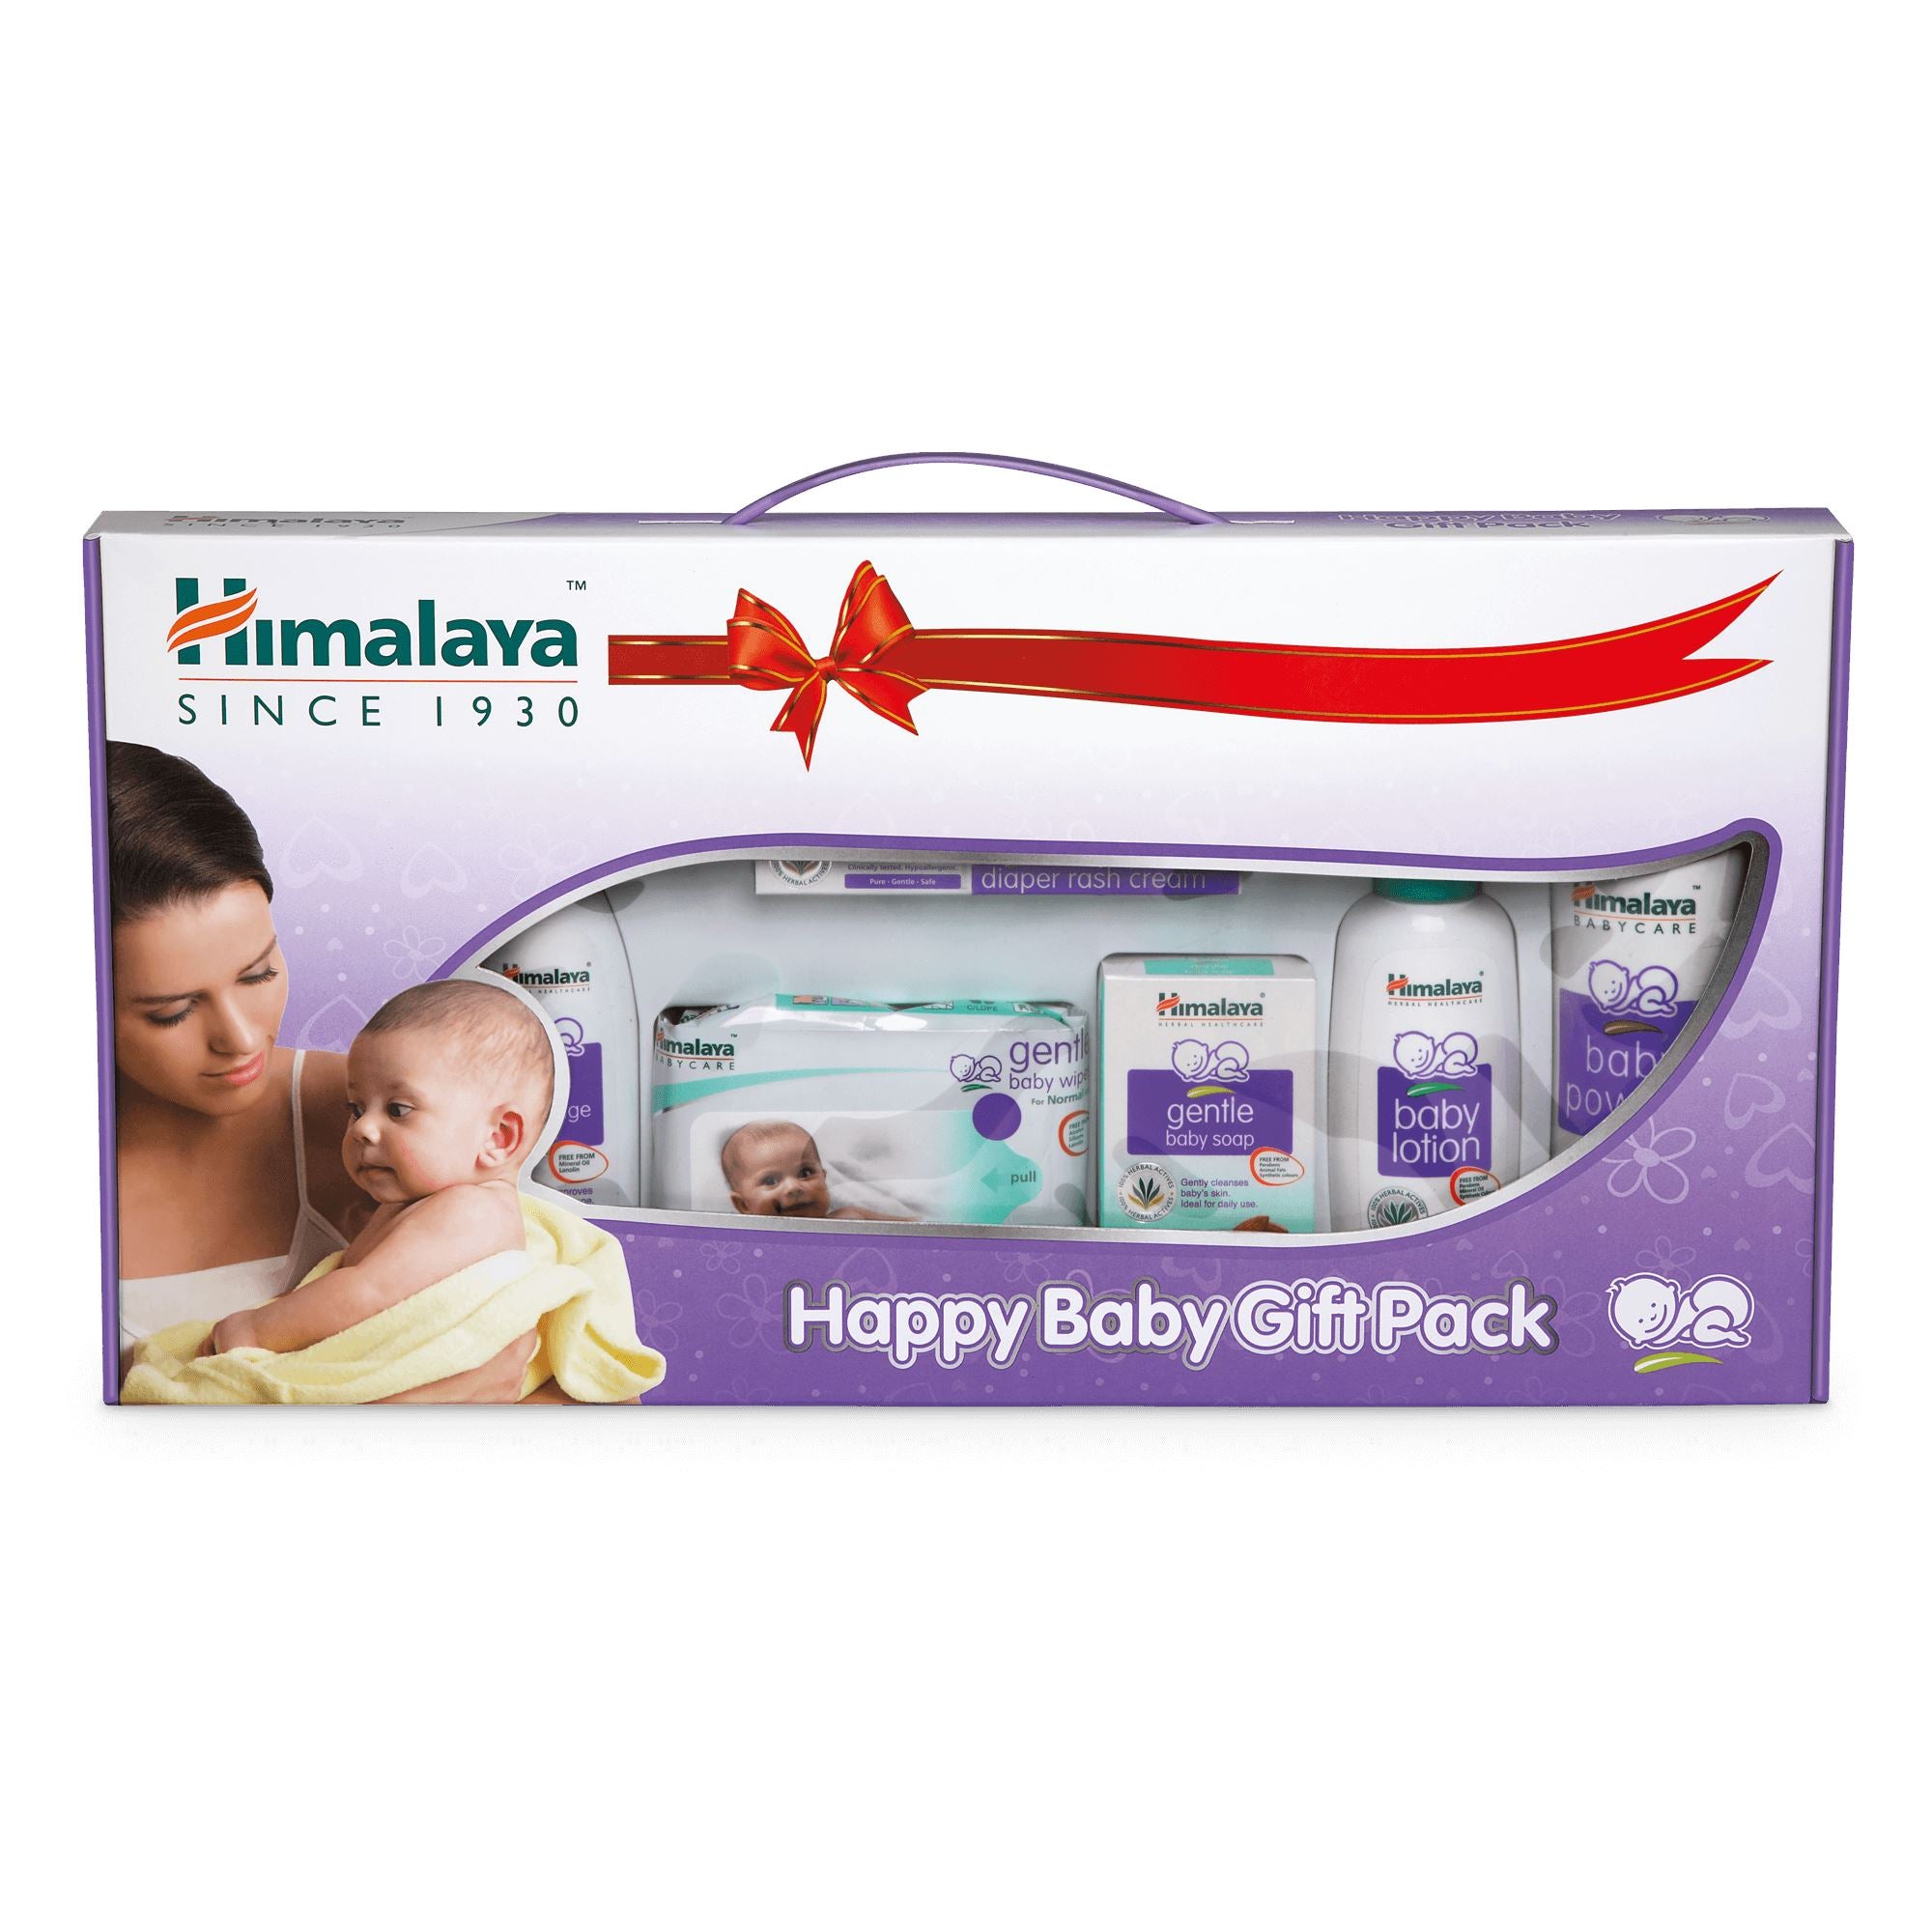 Himalaya Happy Baby Gift Pack 7 in 1 - Shampoo, oil, diaper rash cream, soap, lotion, and powder